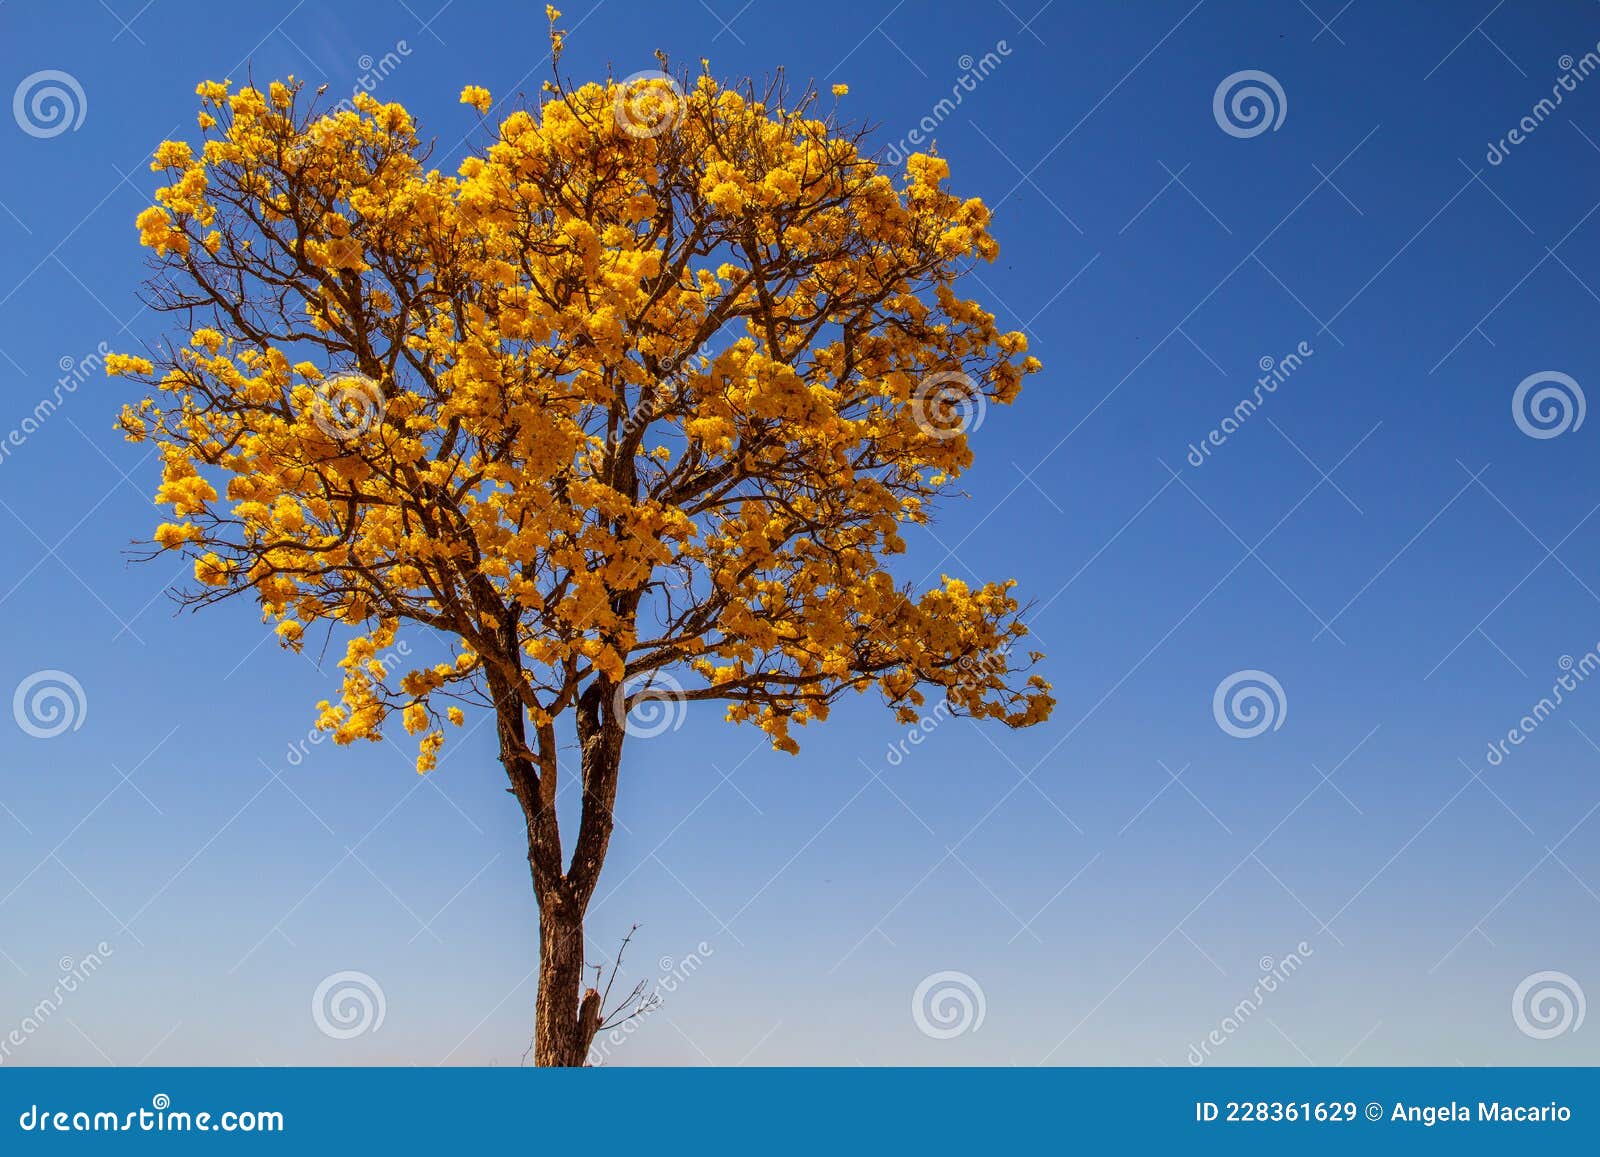 yellow ipÃÂª, a typical brazilian cerrado tree.